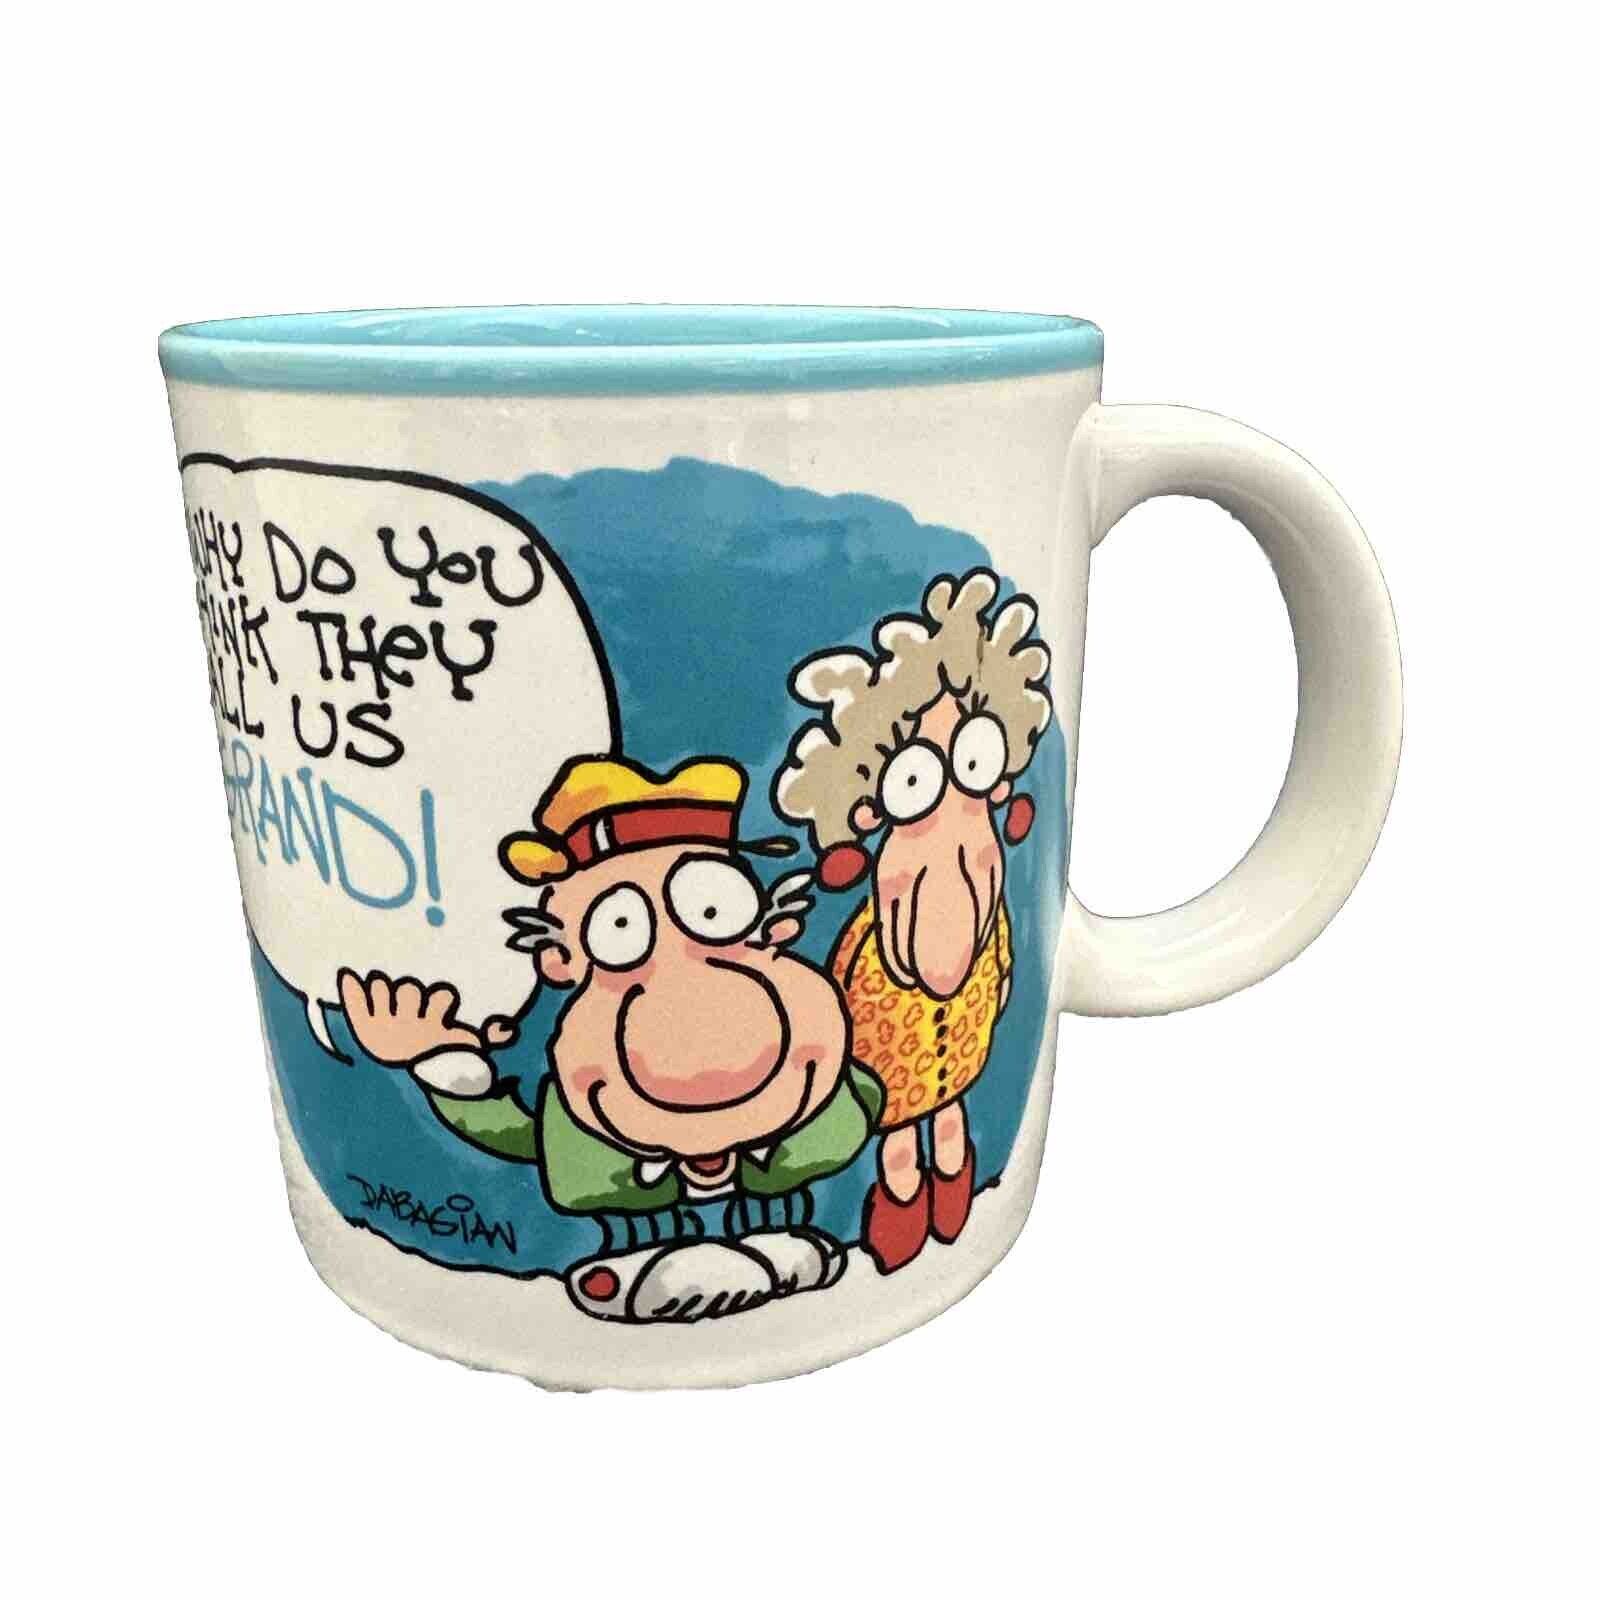 Vintage 1987  Grandparents Mug Shots By BAGADIAN  Coffee Tea Cup Potpourri Press